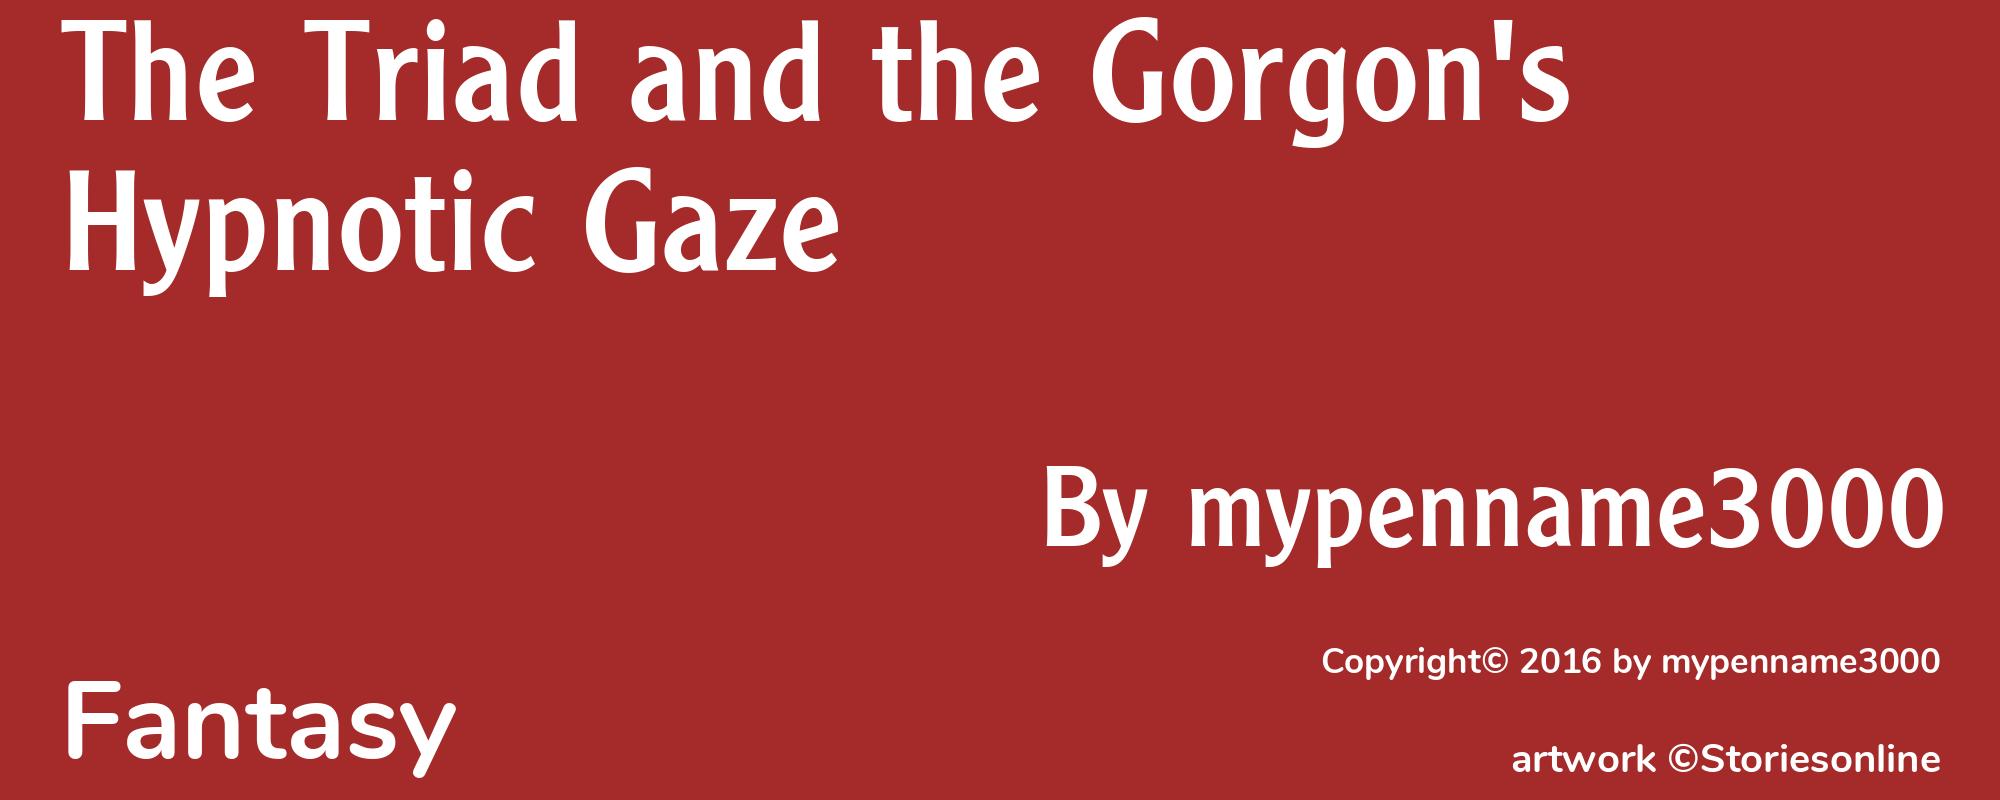 The Triad and the Gorgon's Hypnotic Gaze - Cover